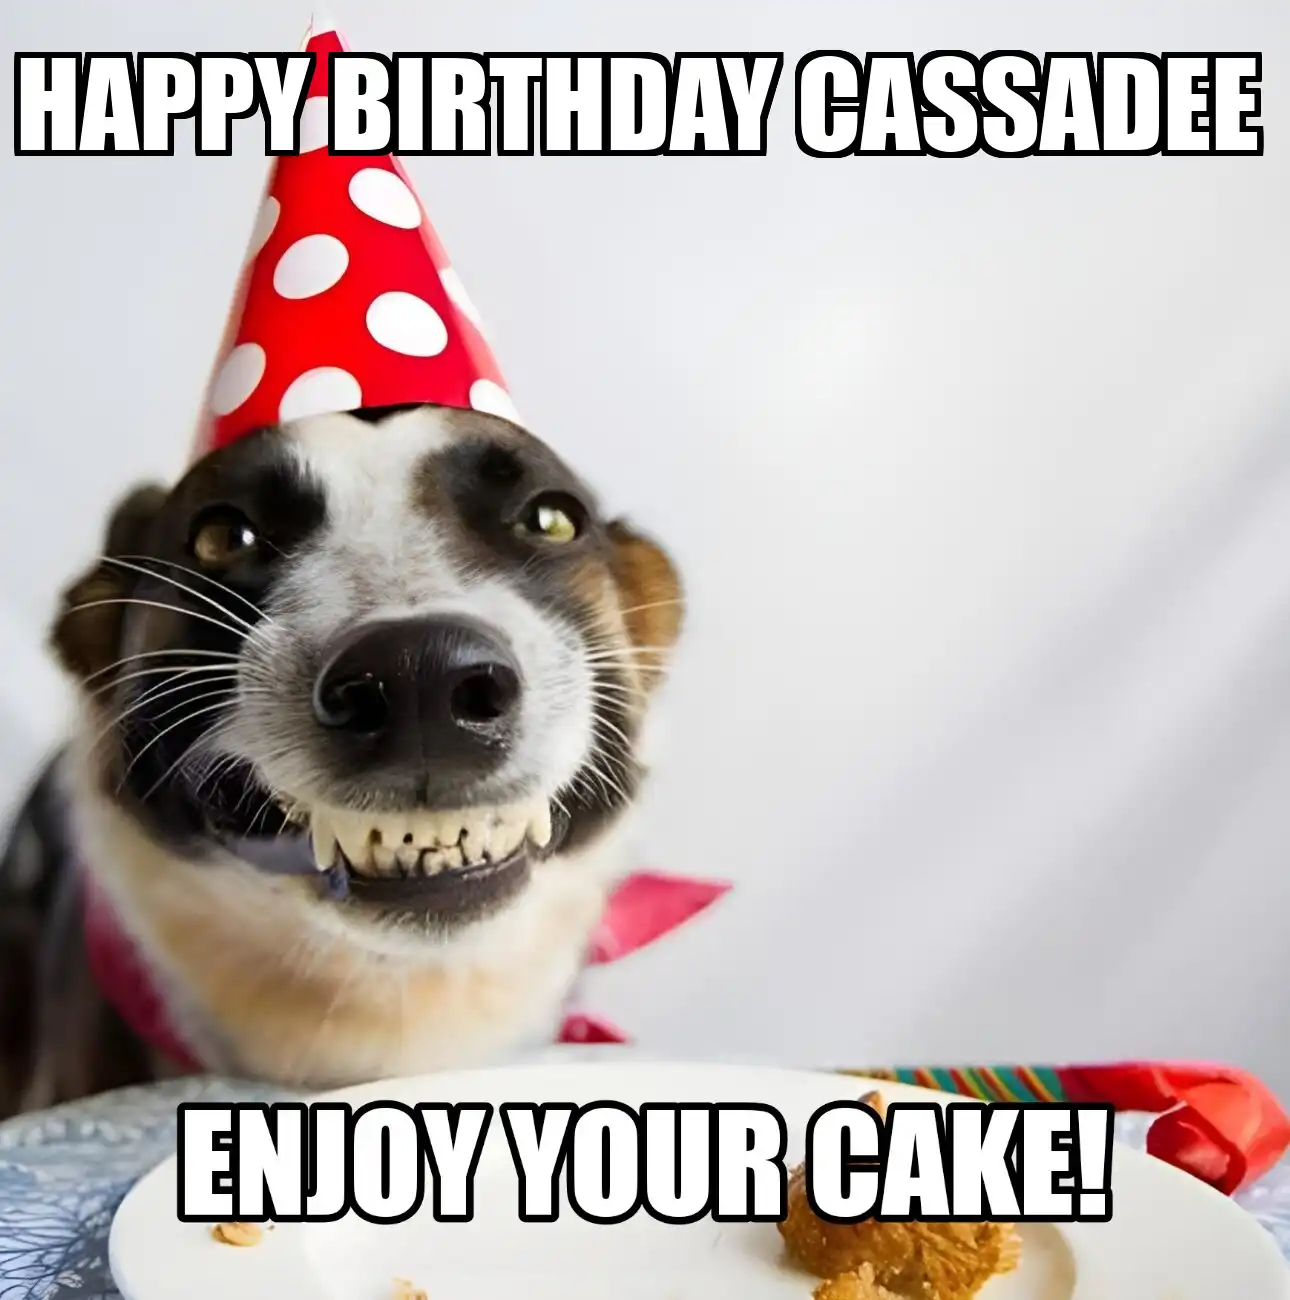 Happy Birthday Cassadee Enjoy Your Cake Dog Meme